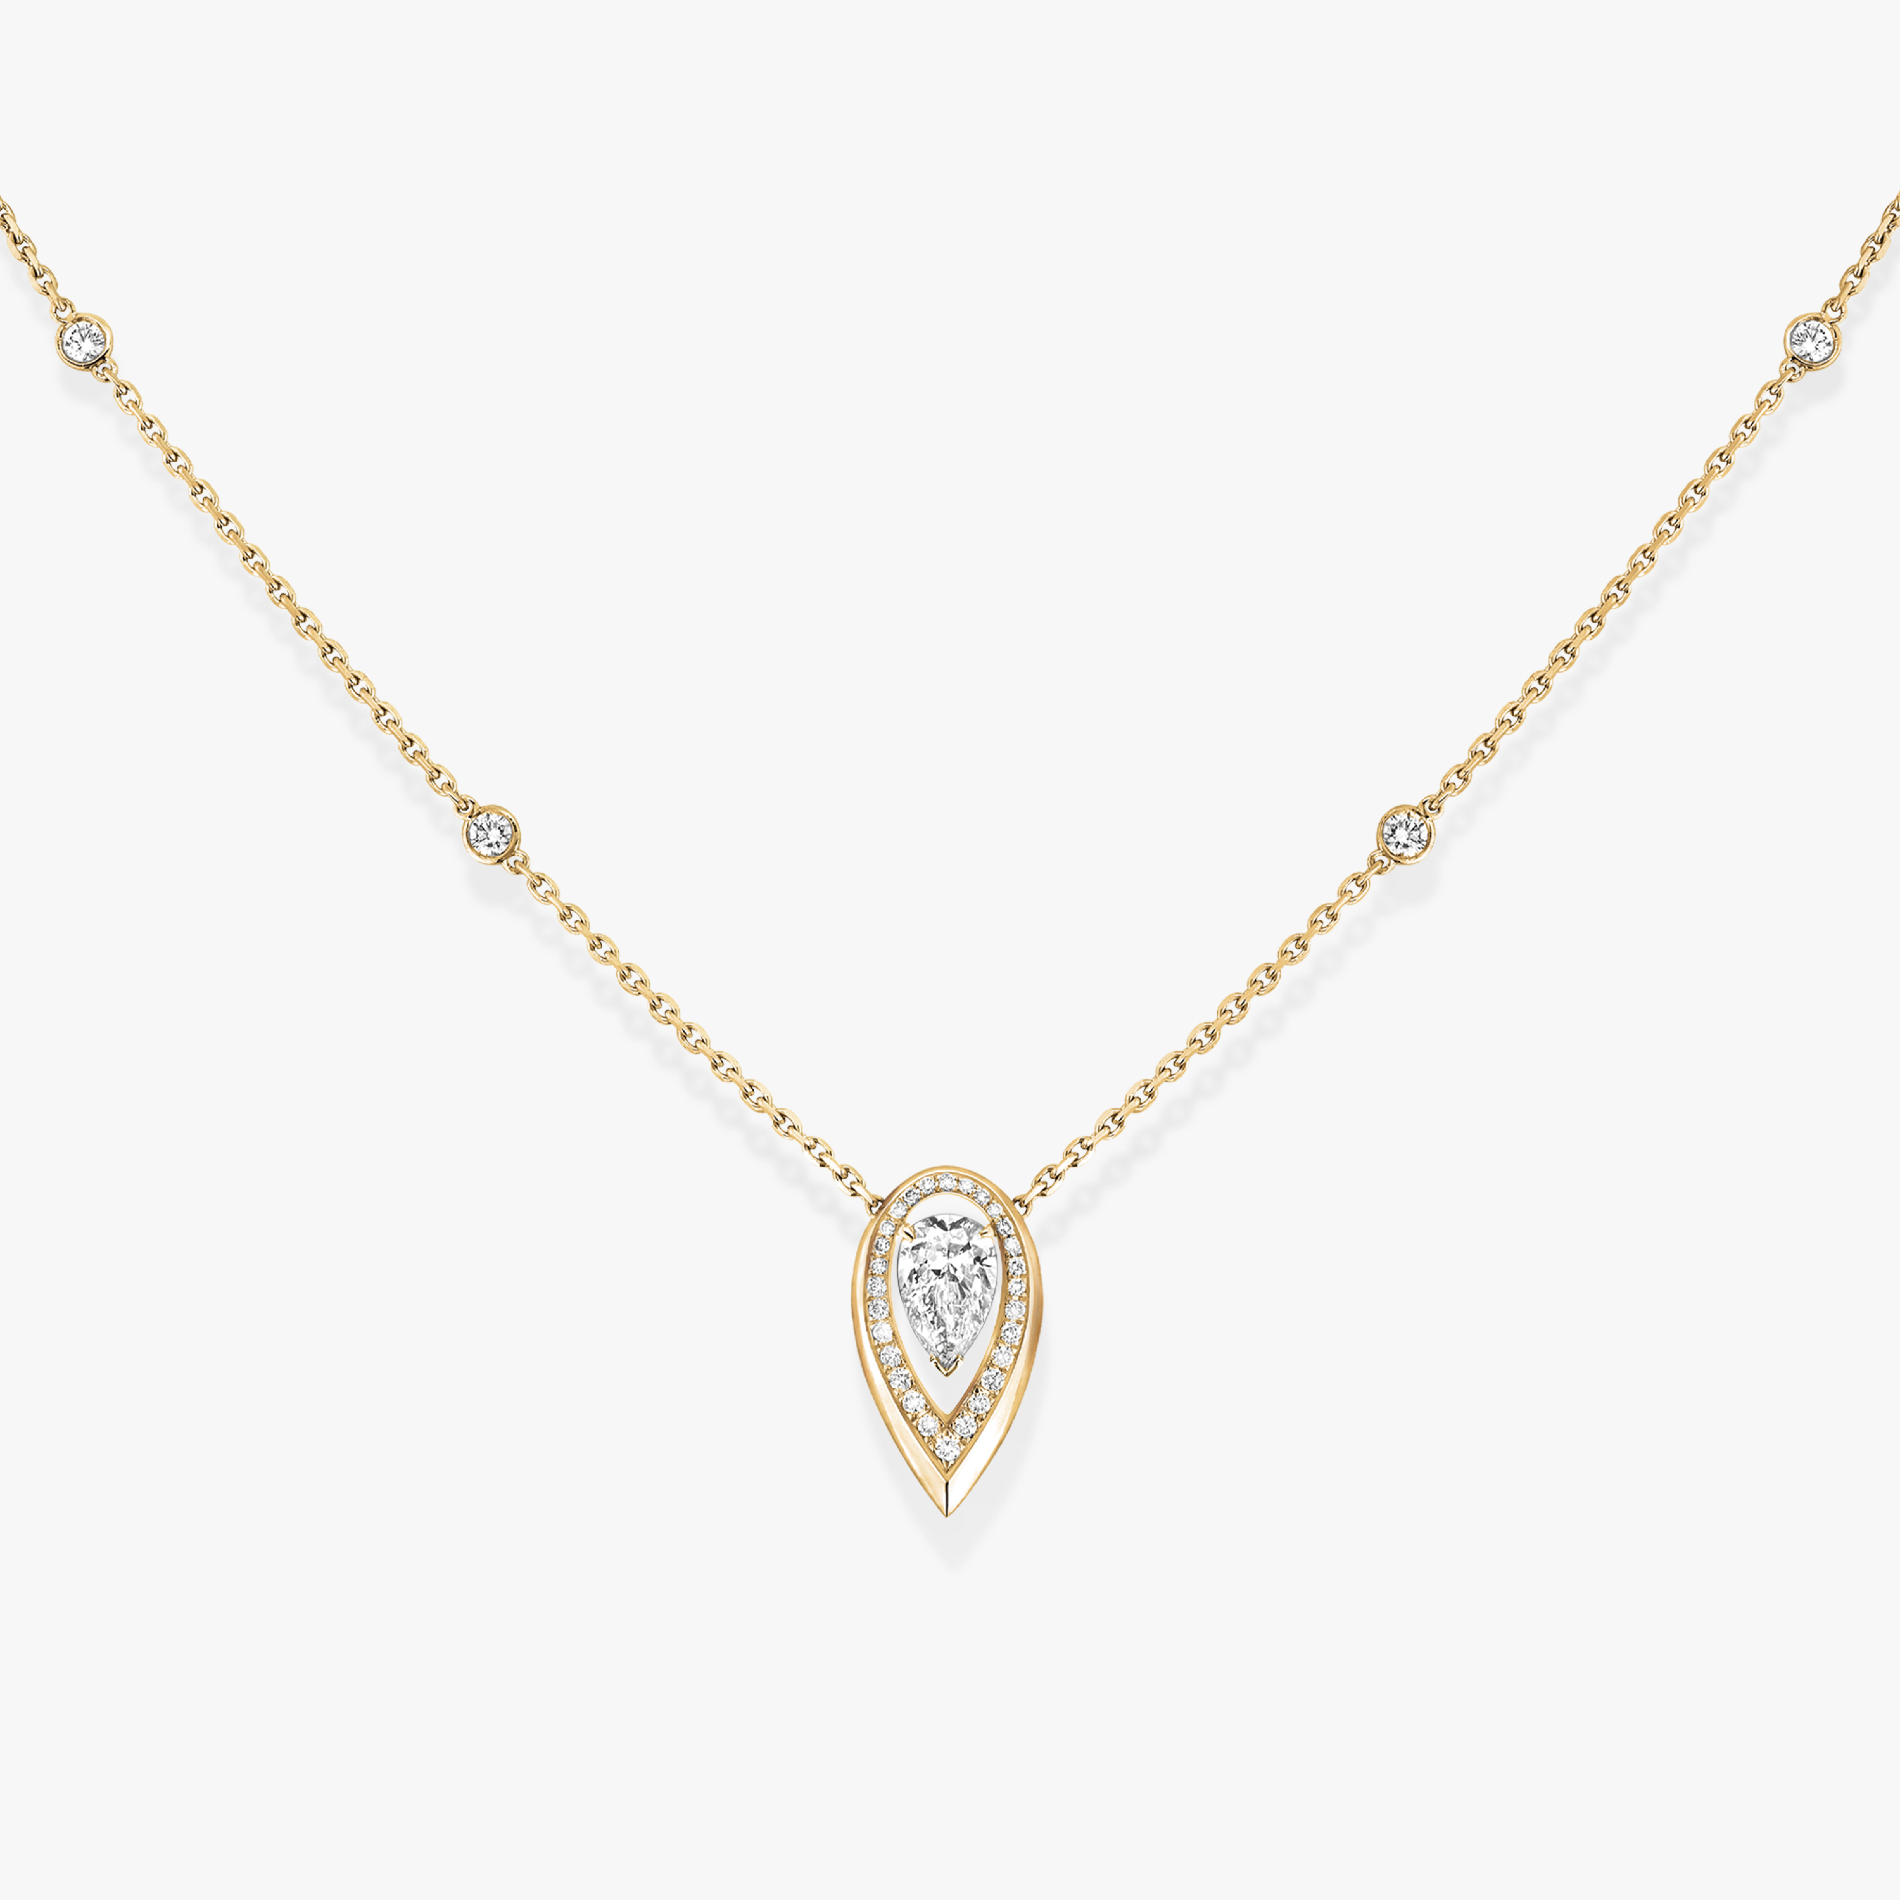 Collier Femme Or Jaune Diamant Fiery 0,25ct 13239-YG